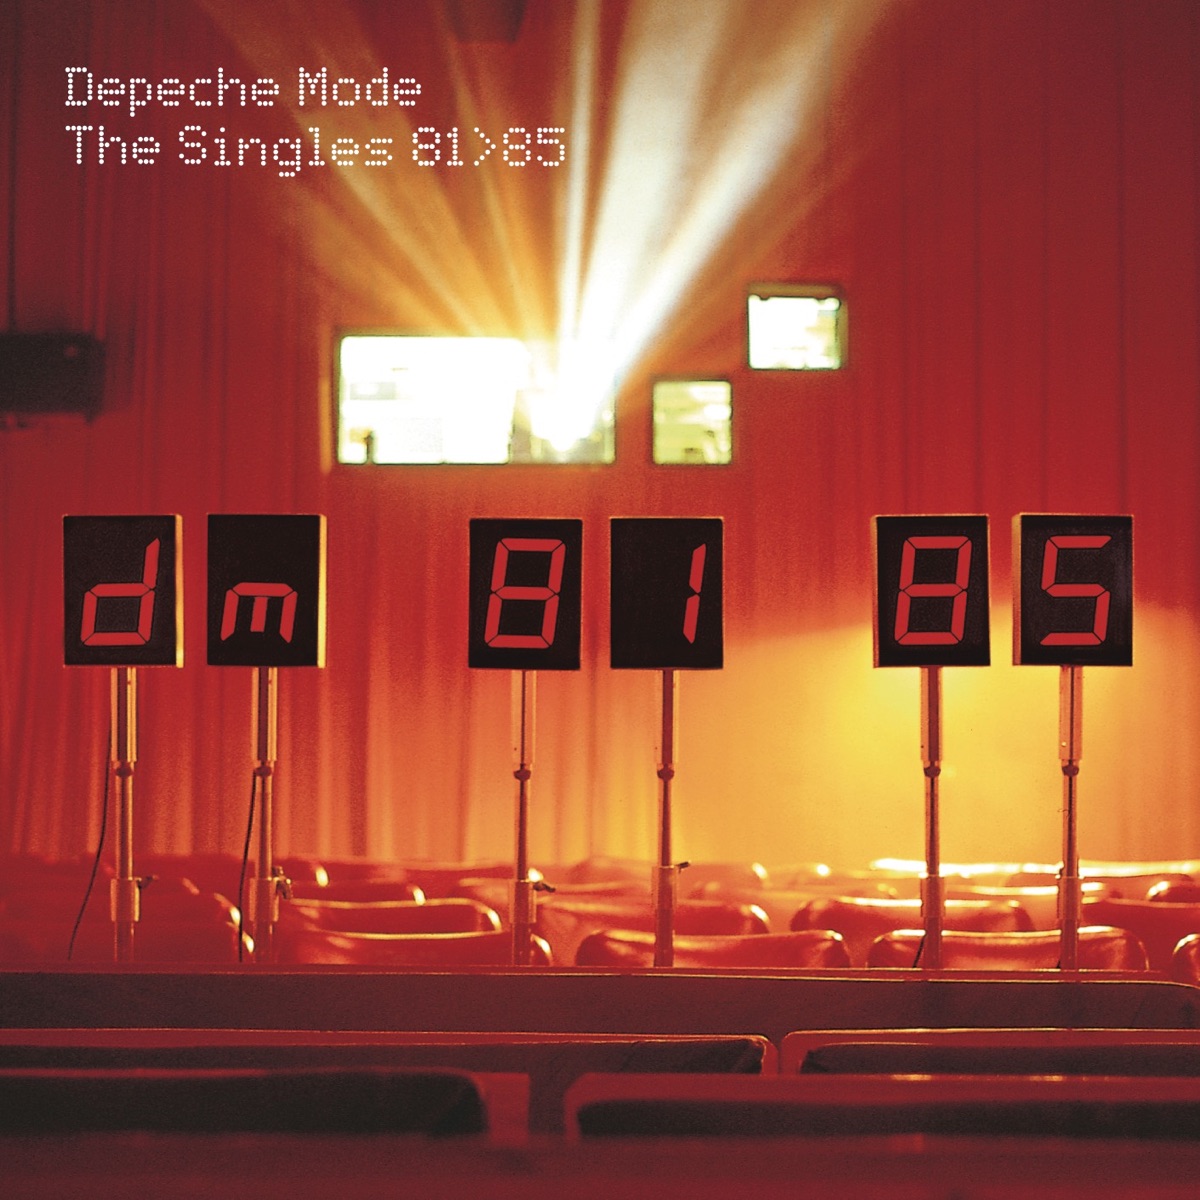 Depeche Mode Tell Apple Music About New Album 'Memento Mori